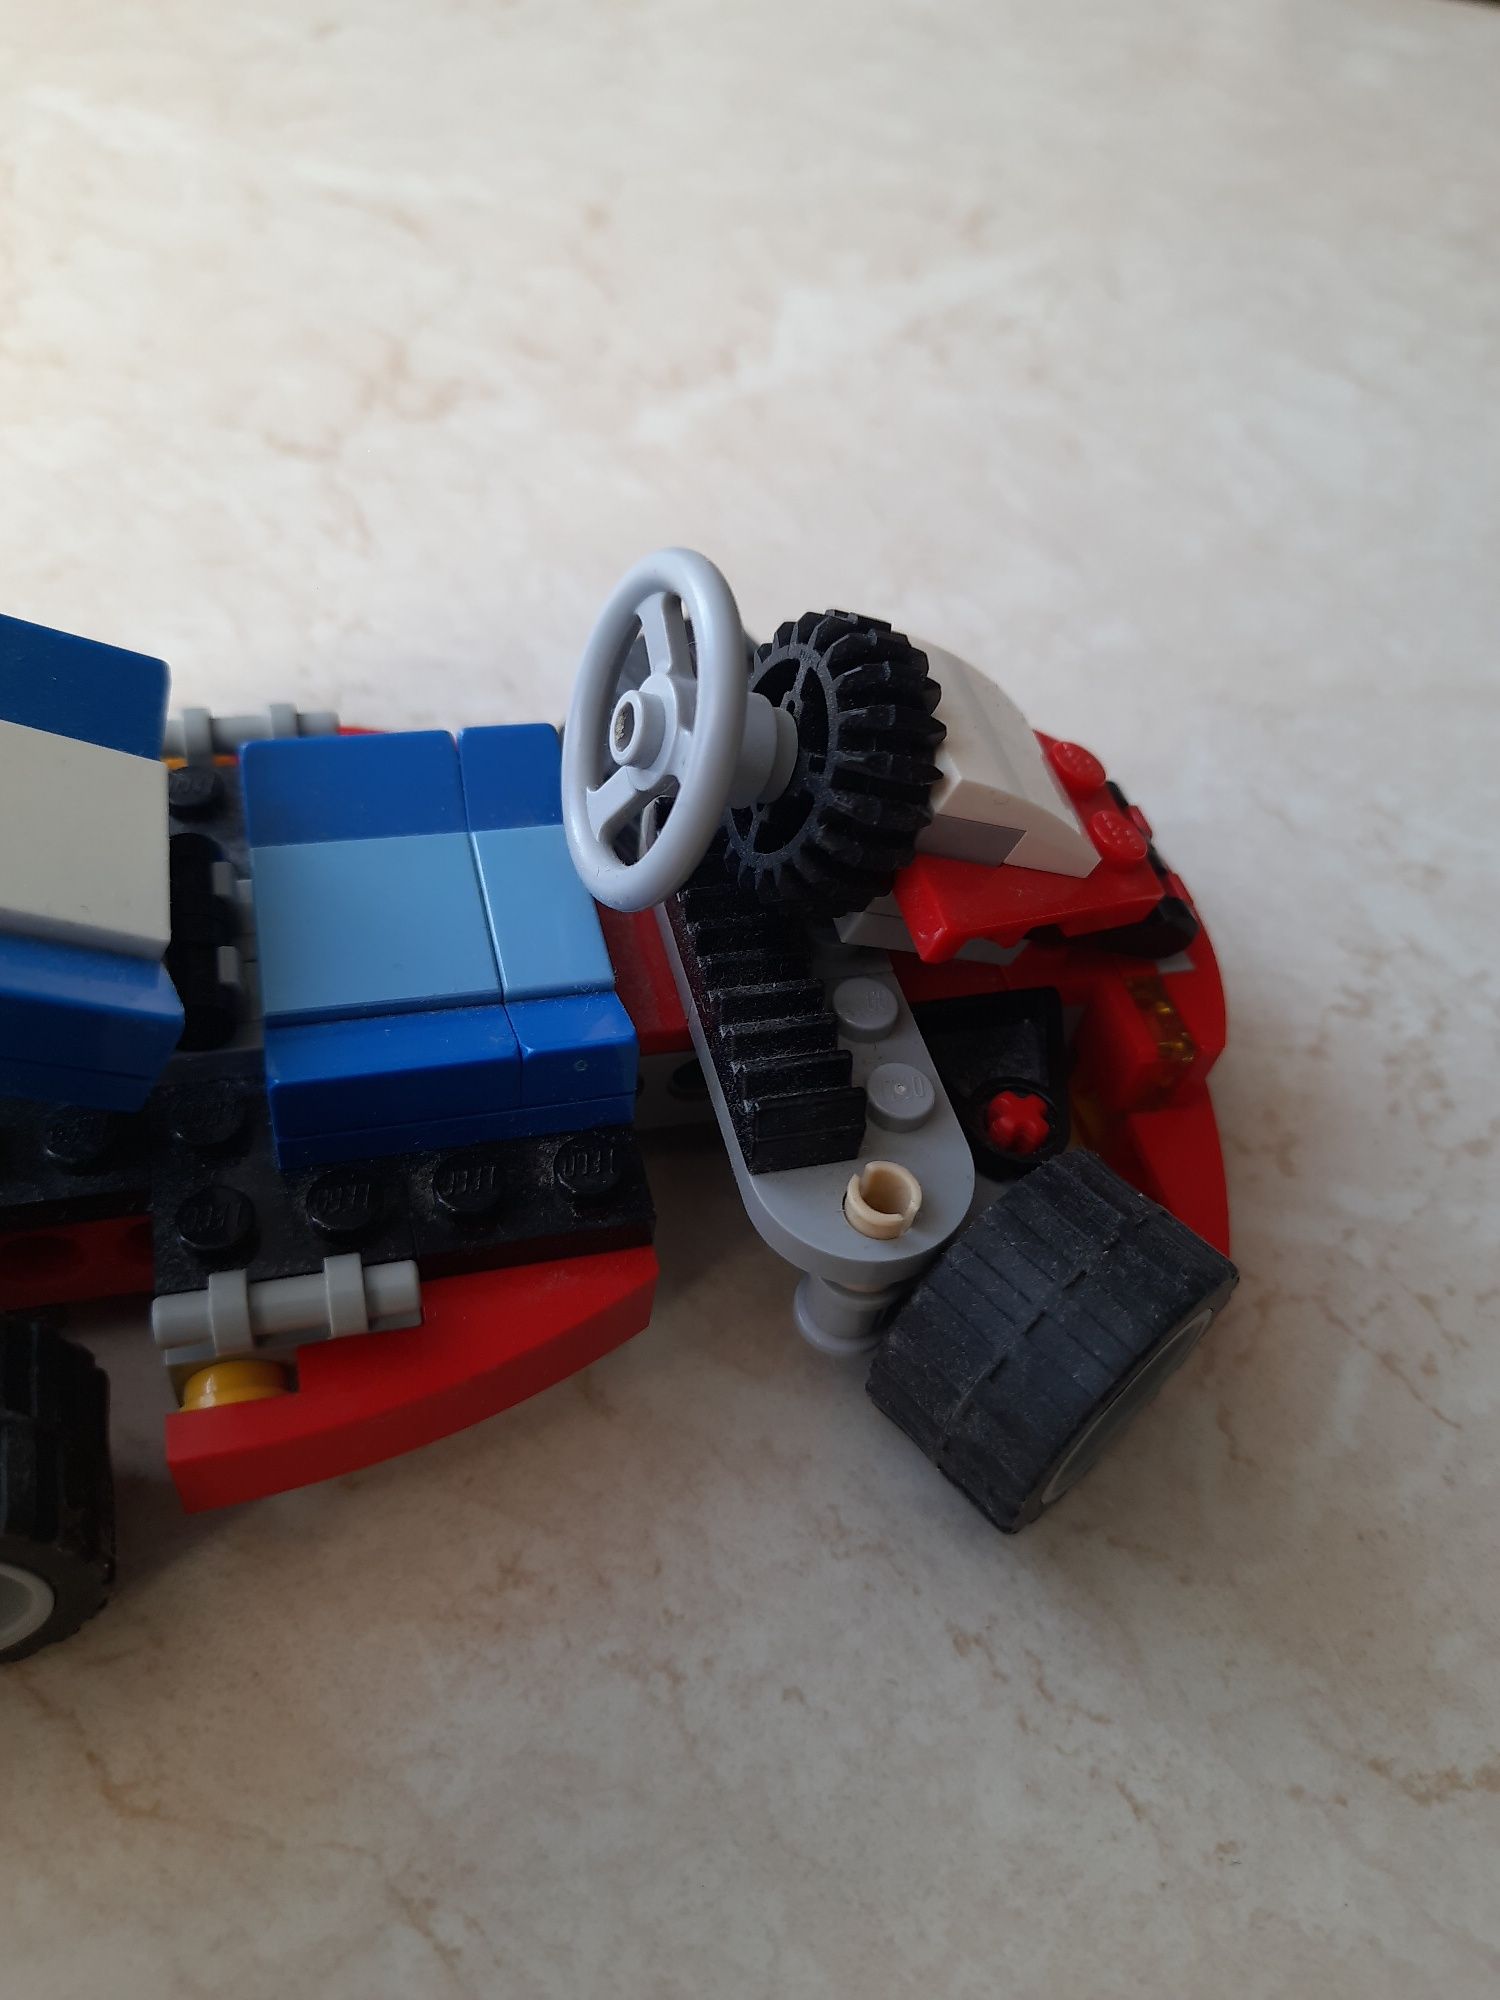 Lego gokart creator 31030